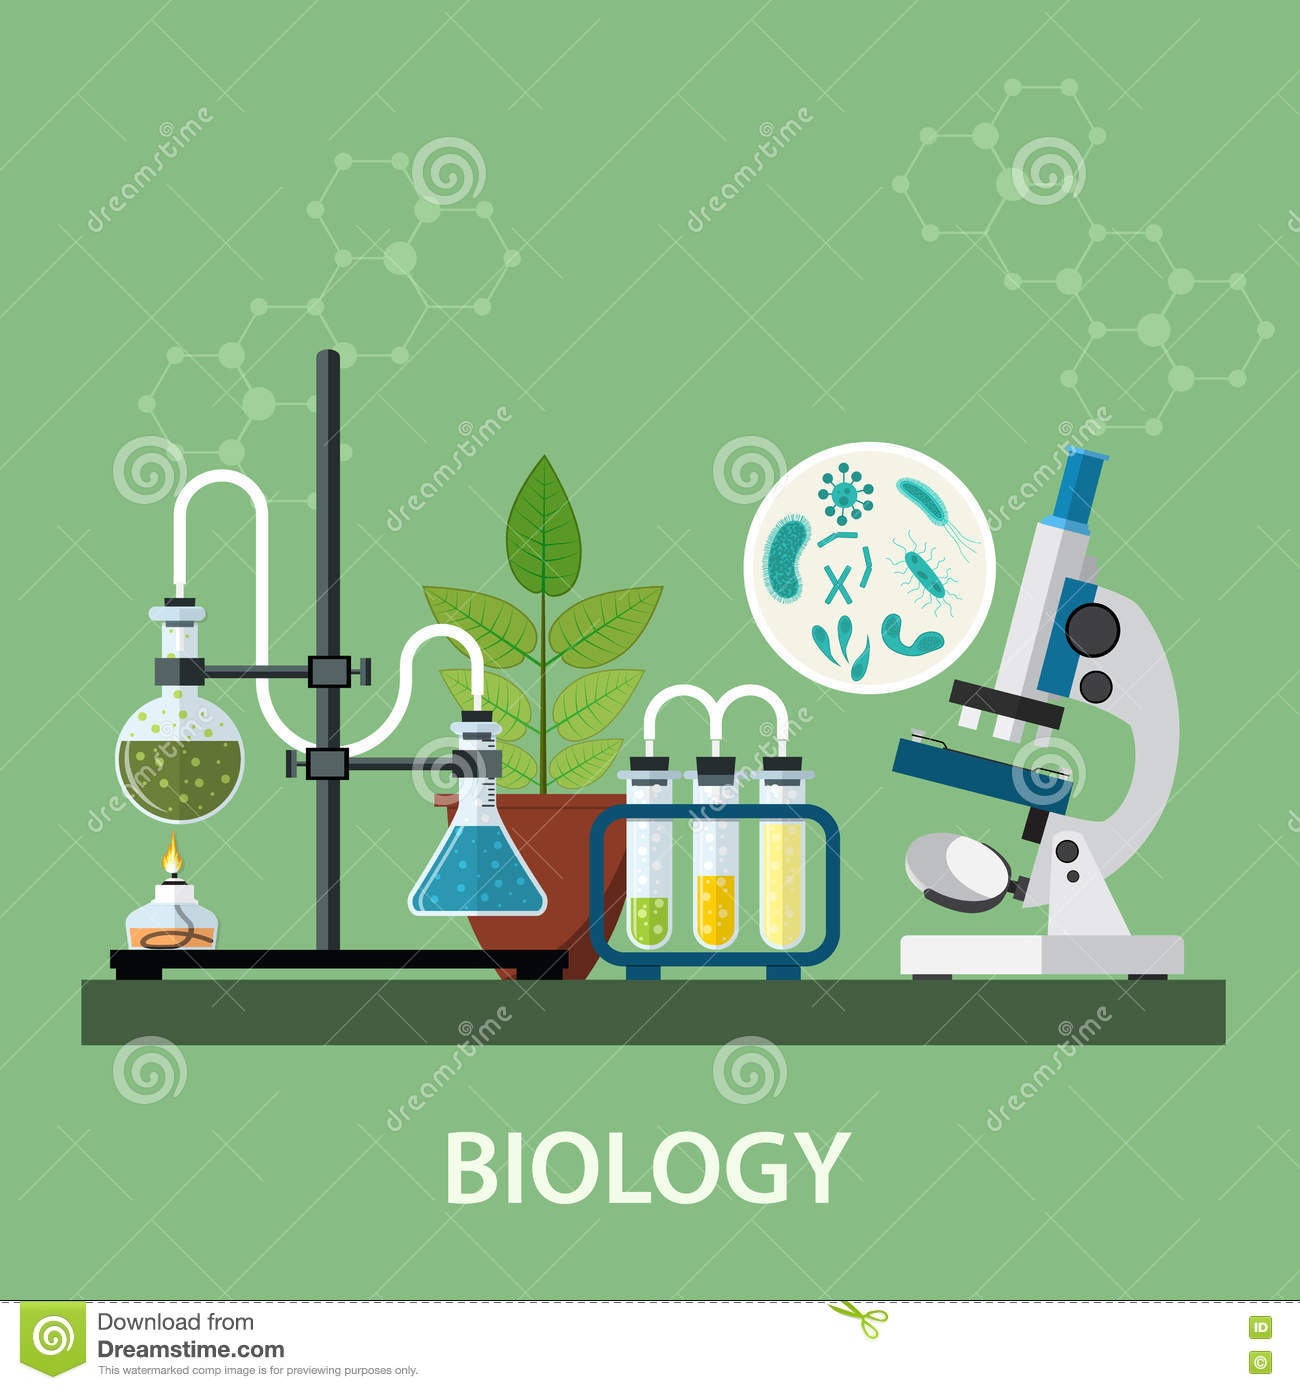 BI191 Biology Laboratory 1 1/2566 (OKR Only)